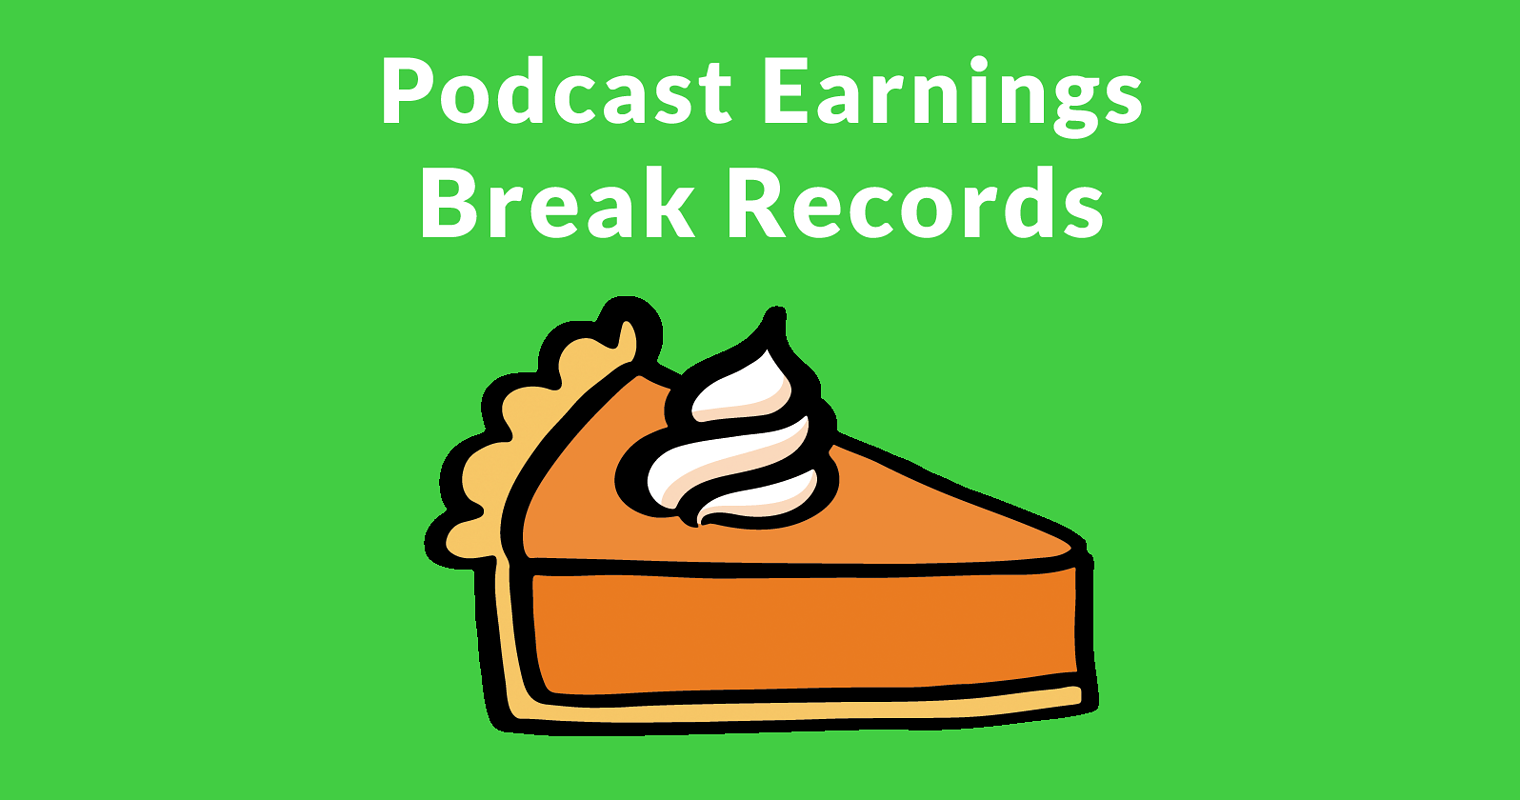 Podcast Revenues Soar